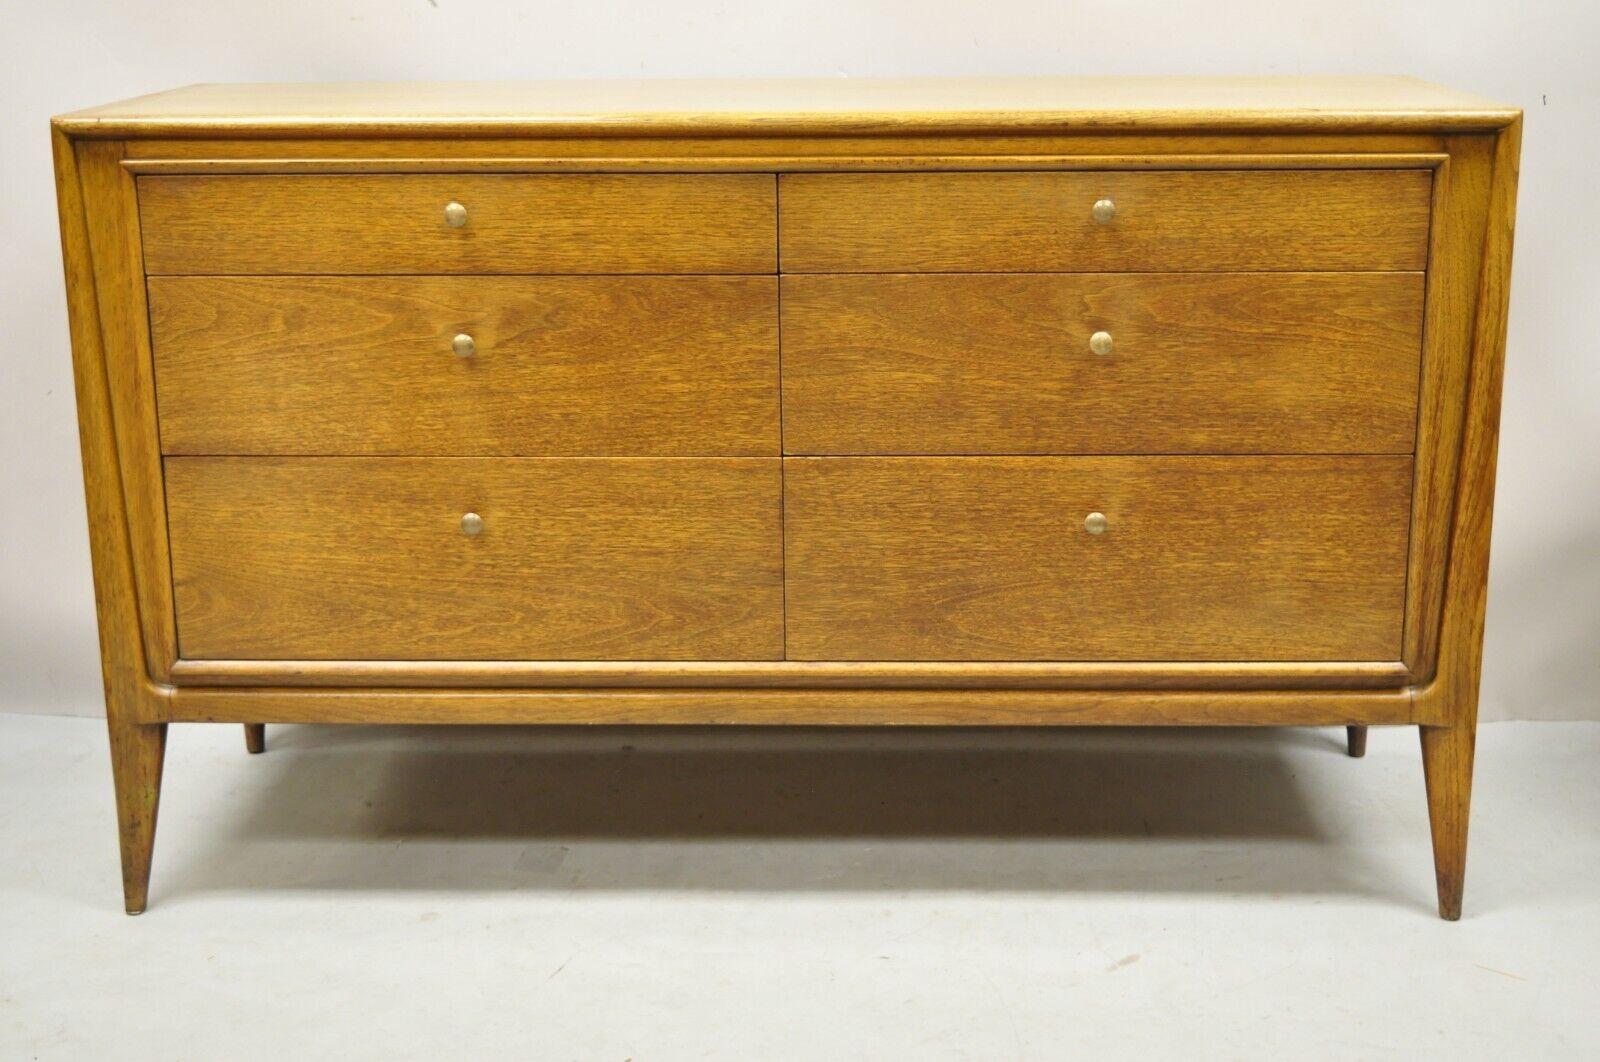 John Stuart Facade Mt. Airy Furniture walnut Mid-Century Modern double dressers - a Pair. Listing includes (2) dressers, John Stuart 